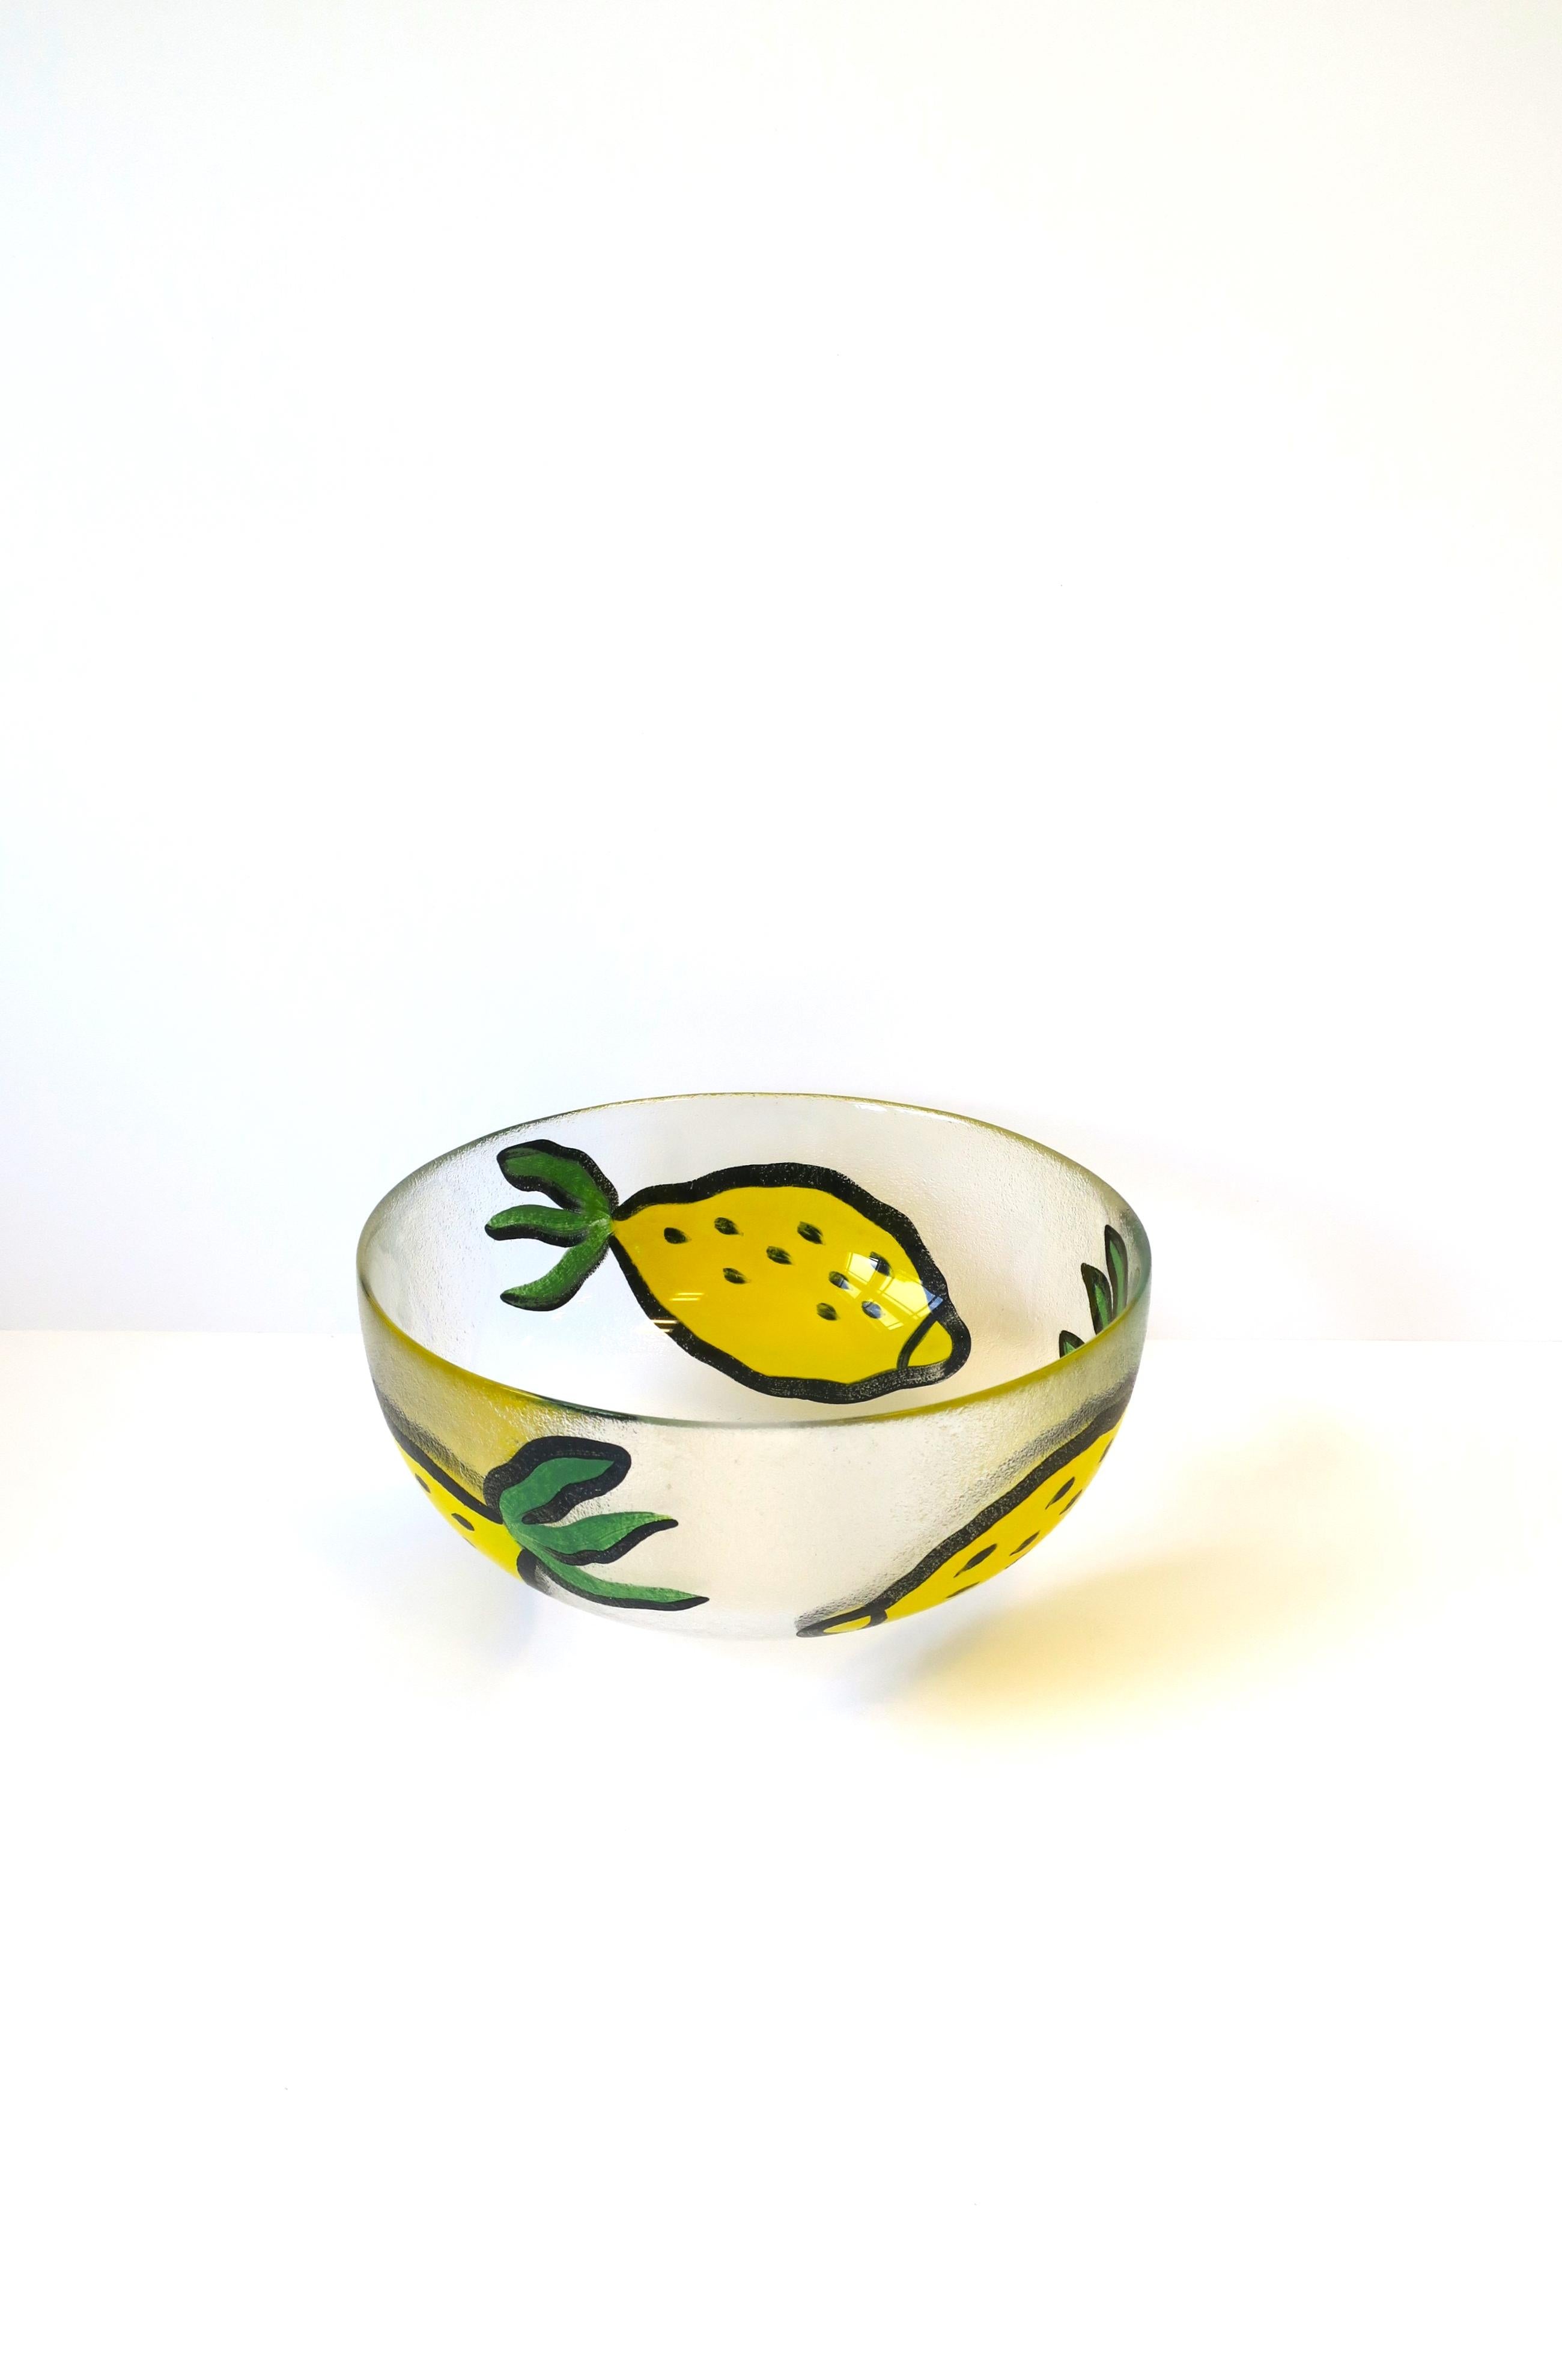 20th Century Swedish Postmodern Lemons Centerpiece Bowl by Ulrica Hydman-Vallien, 1990s For Sale